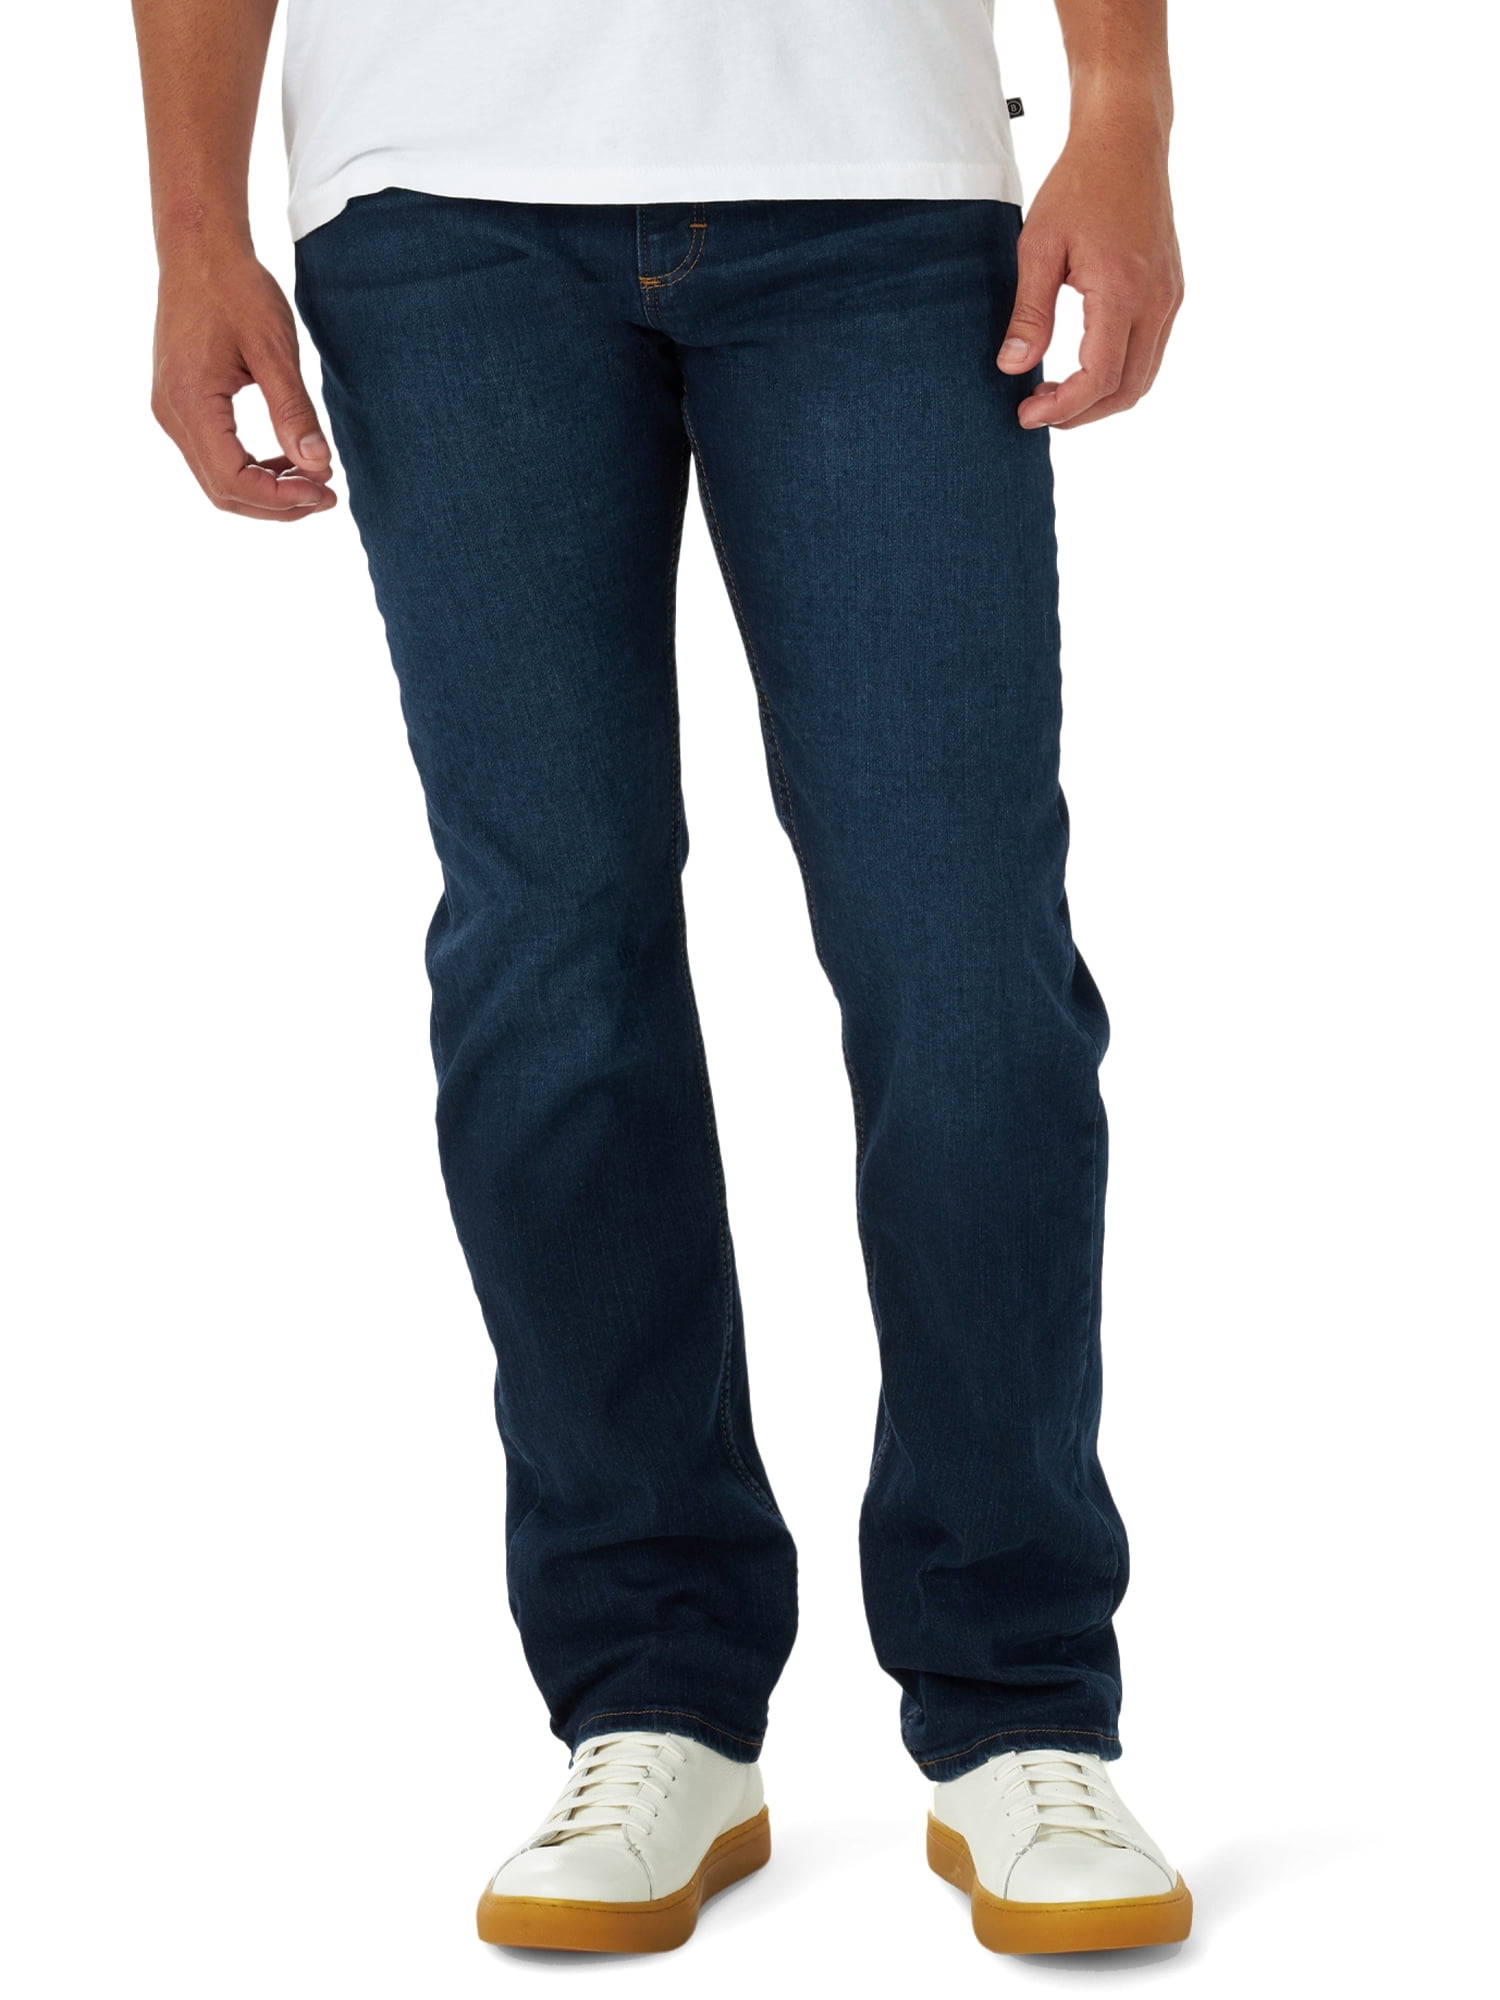 Wrangler Men's Performance Series Stretch Regular Fit Jean 